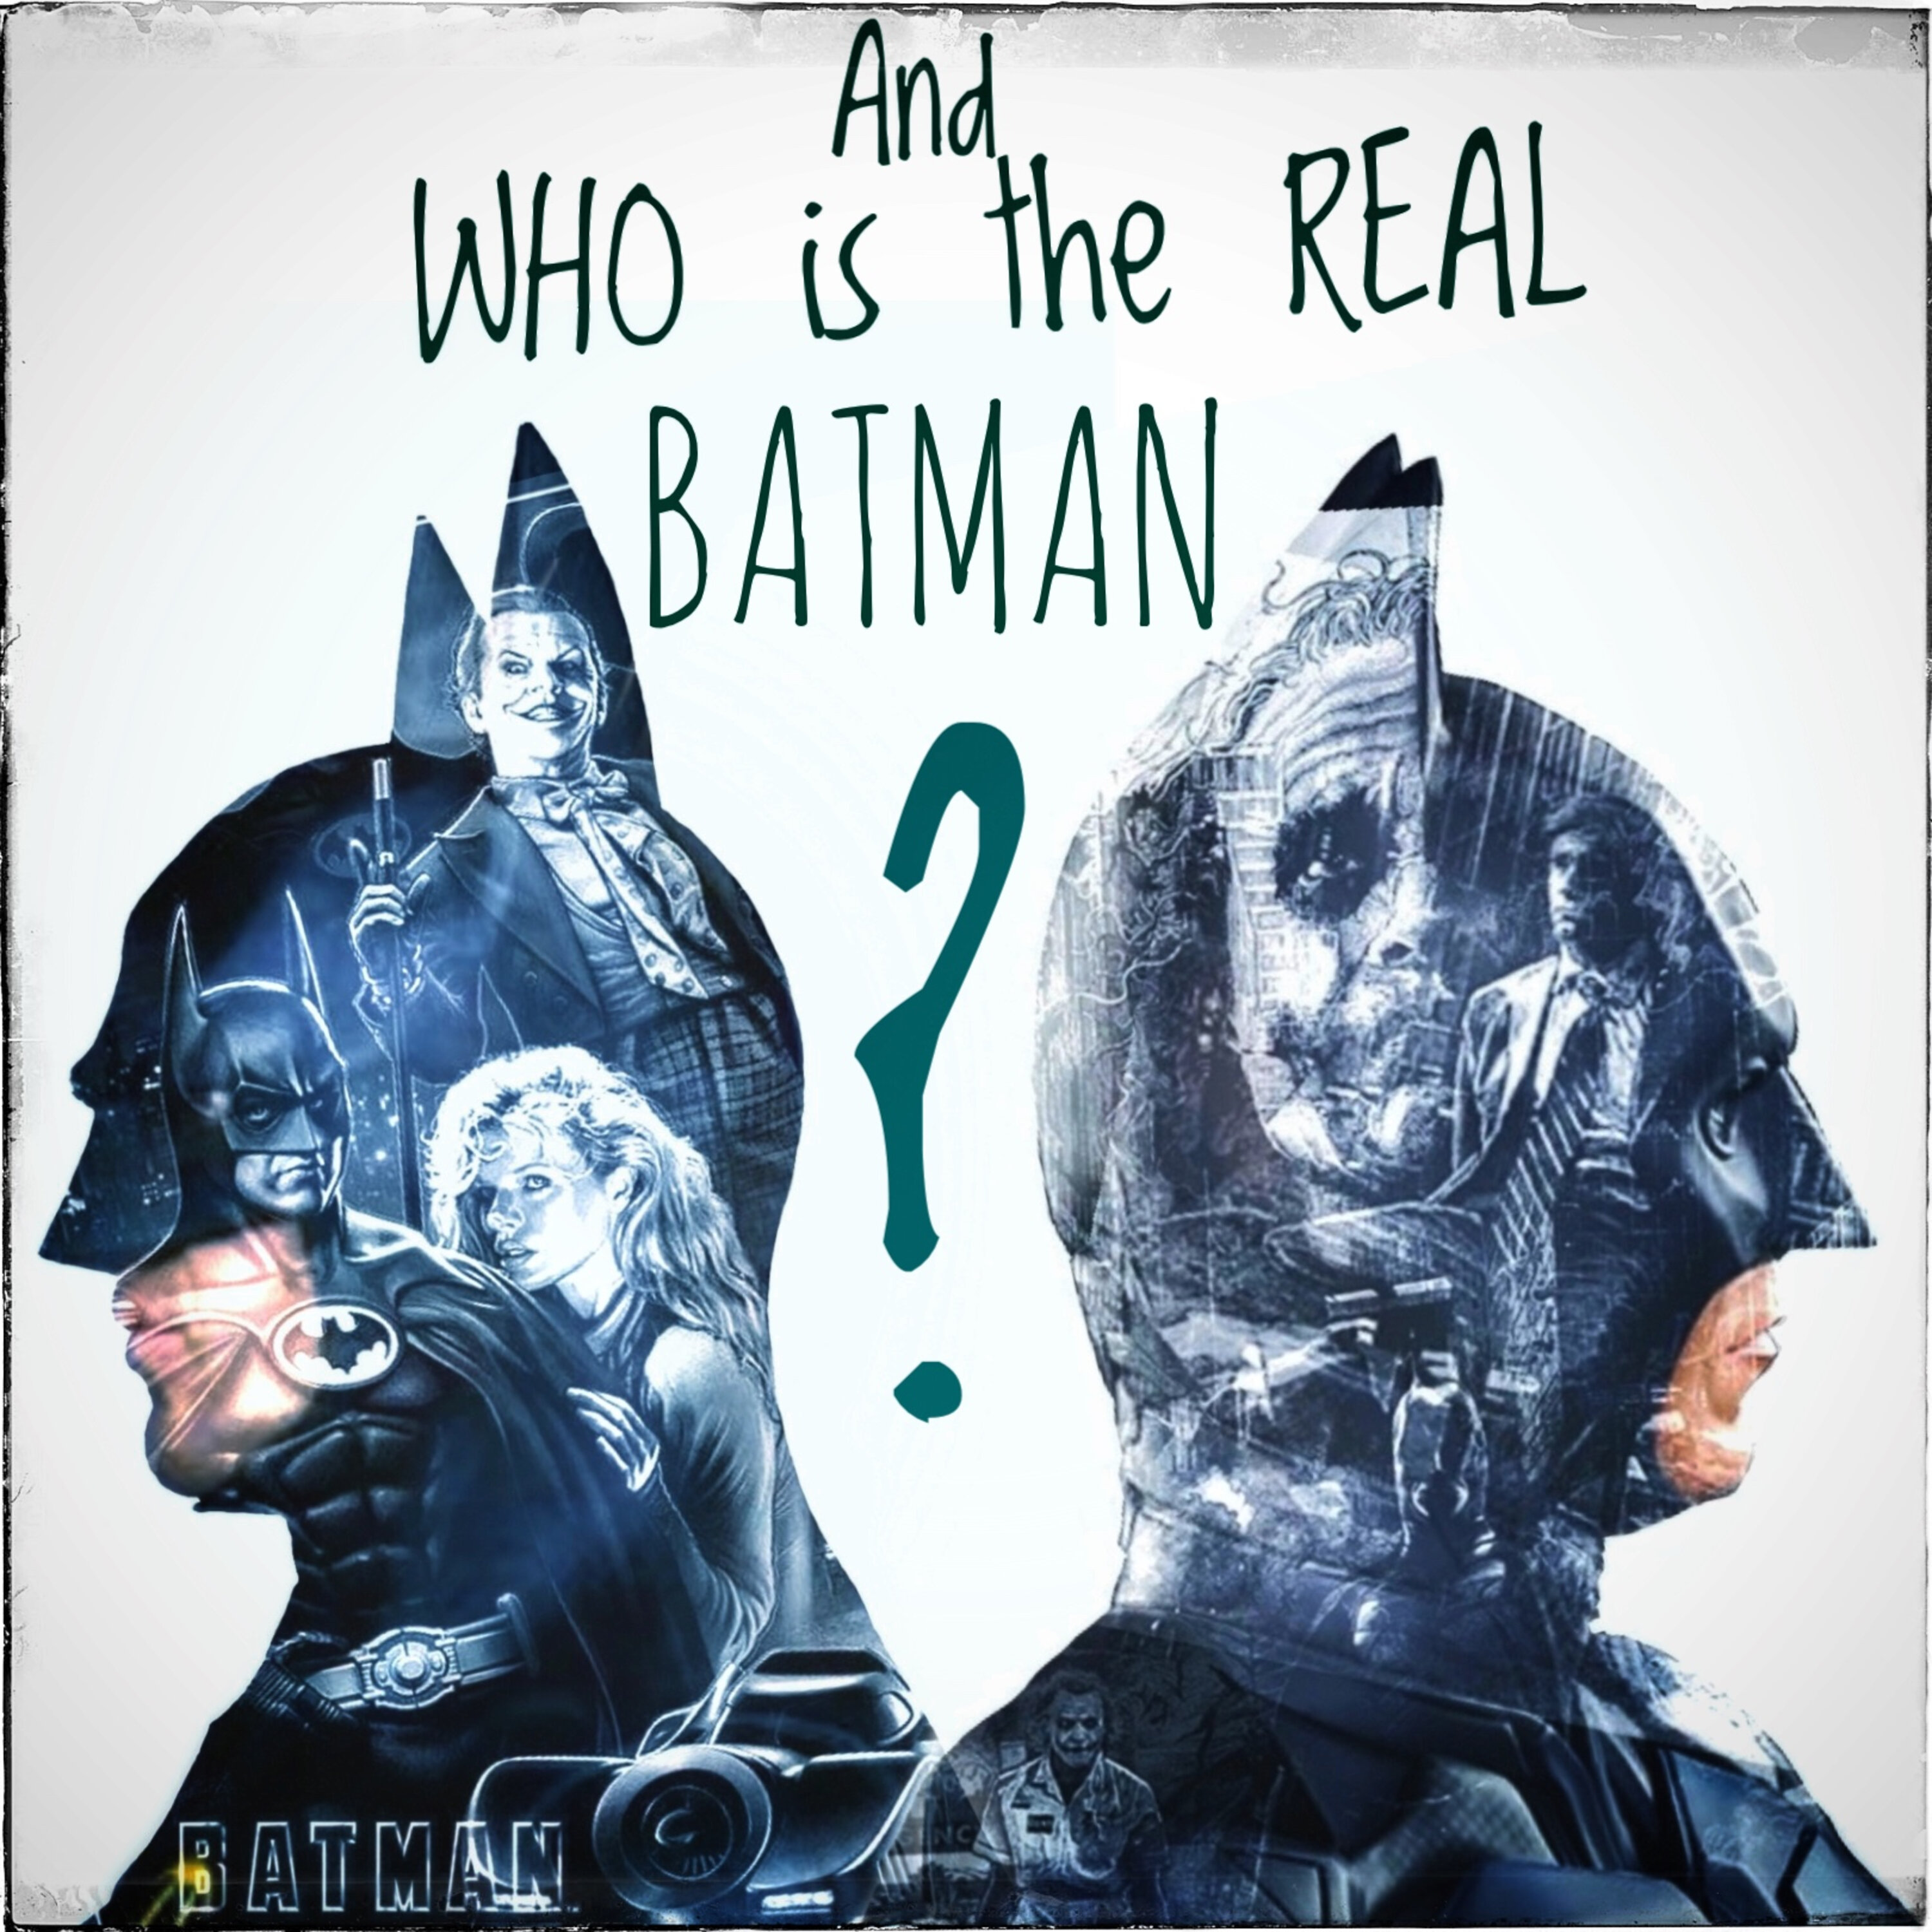 Batman (1989) vs. The Dark Knight (2008): Episode 3